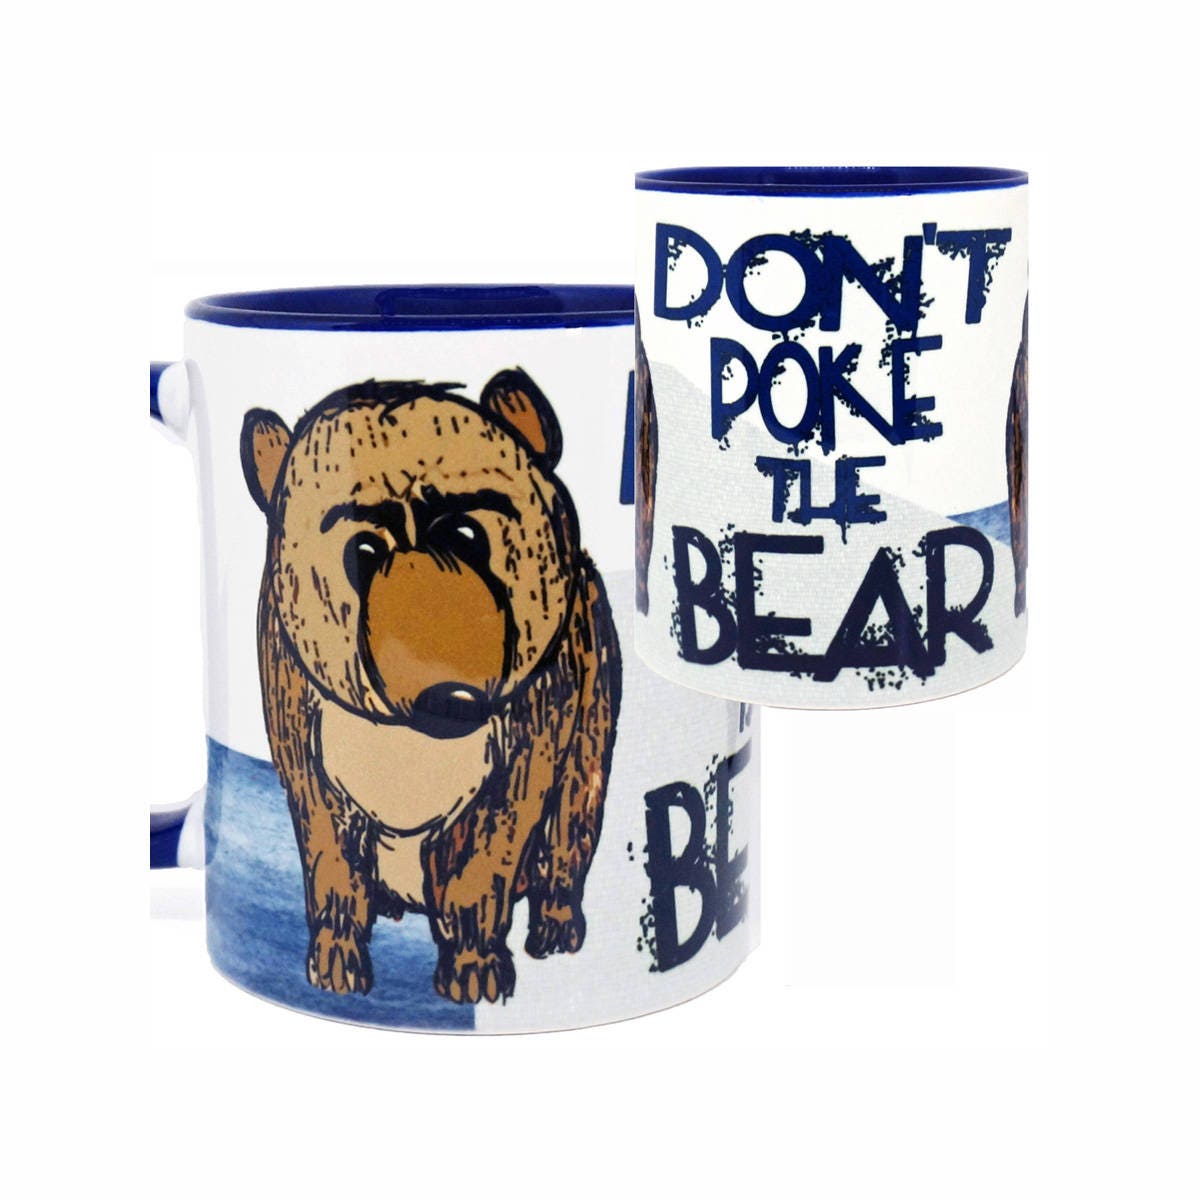 Bear Poke Blue Mug Funny Mug Quote Mug